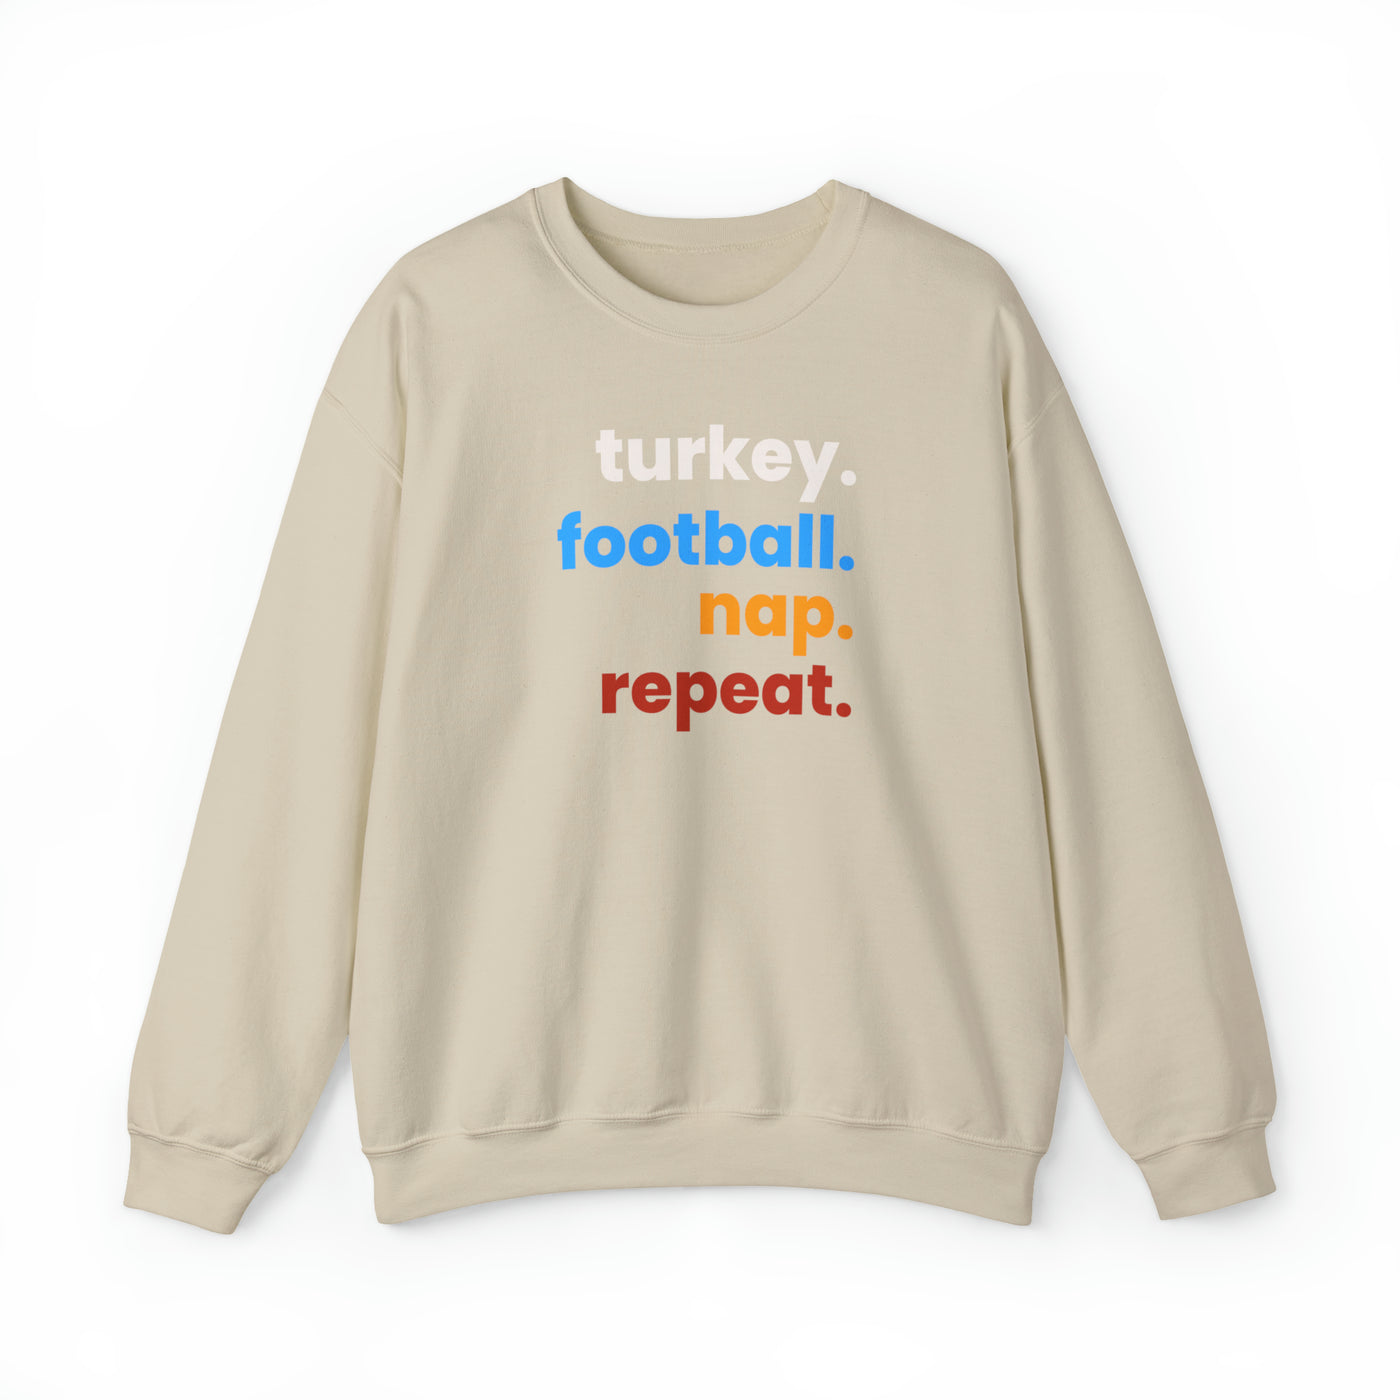 Turkey. Football. Nap. Repeat. Crewneck Sweatshirt